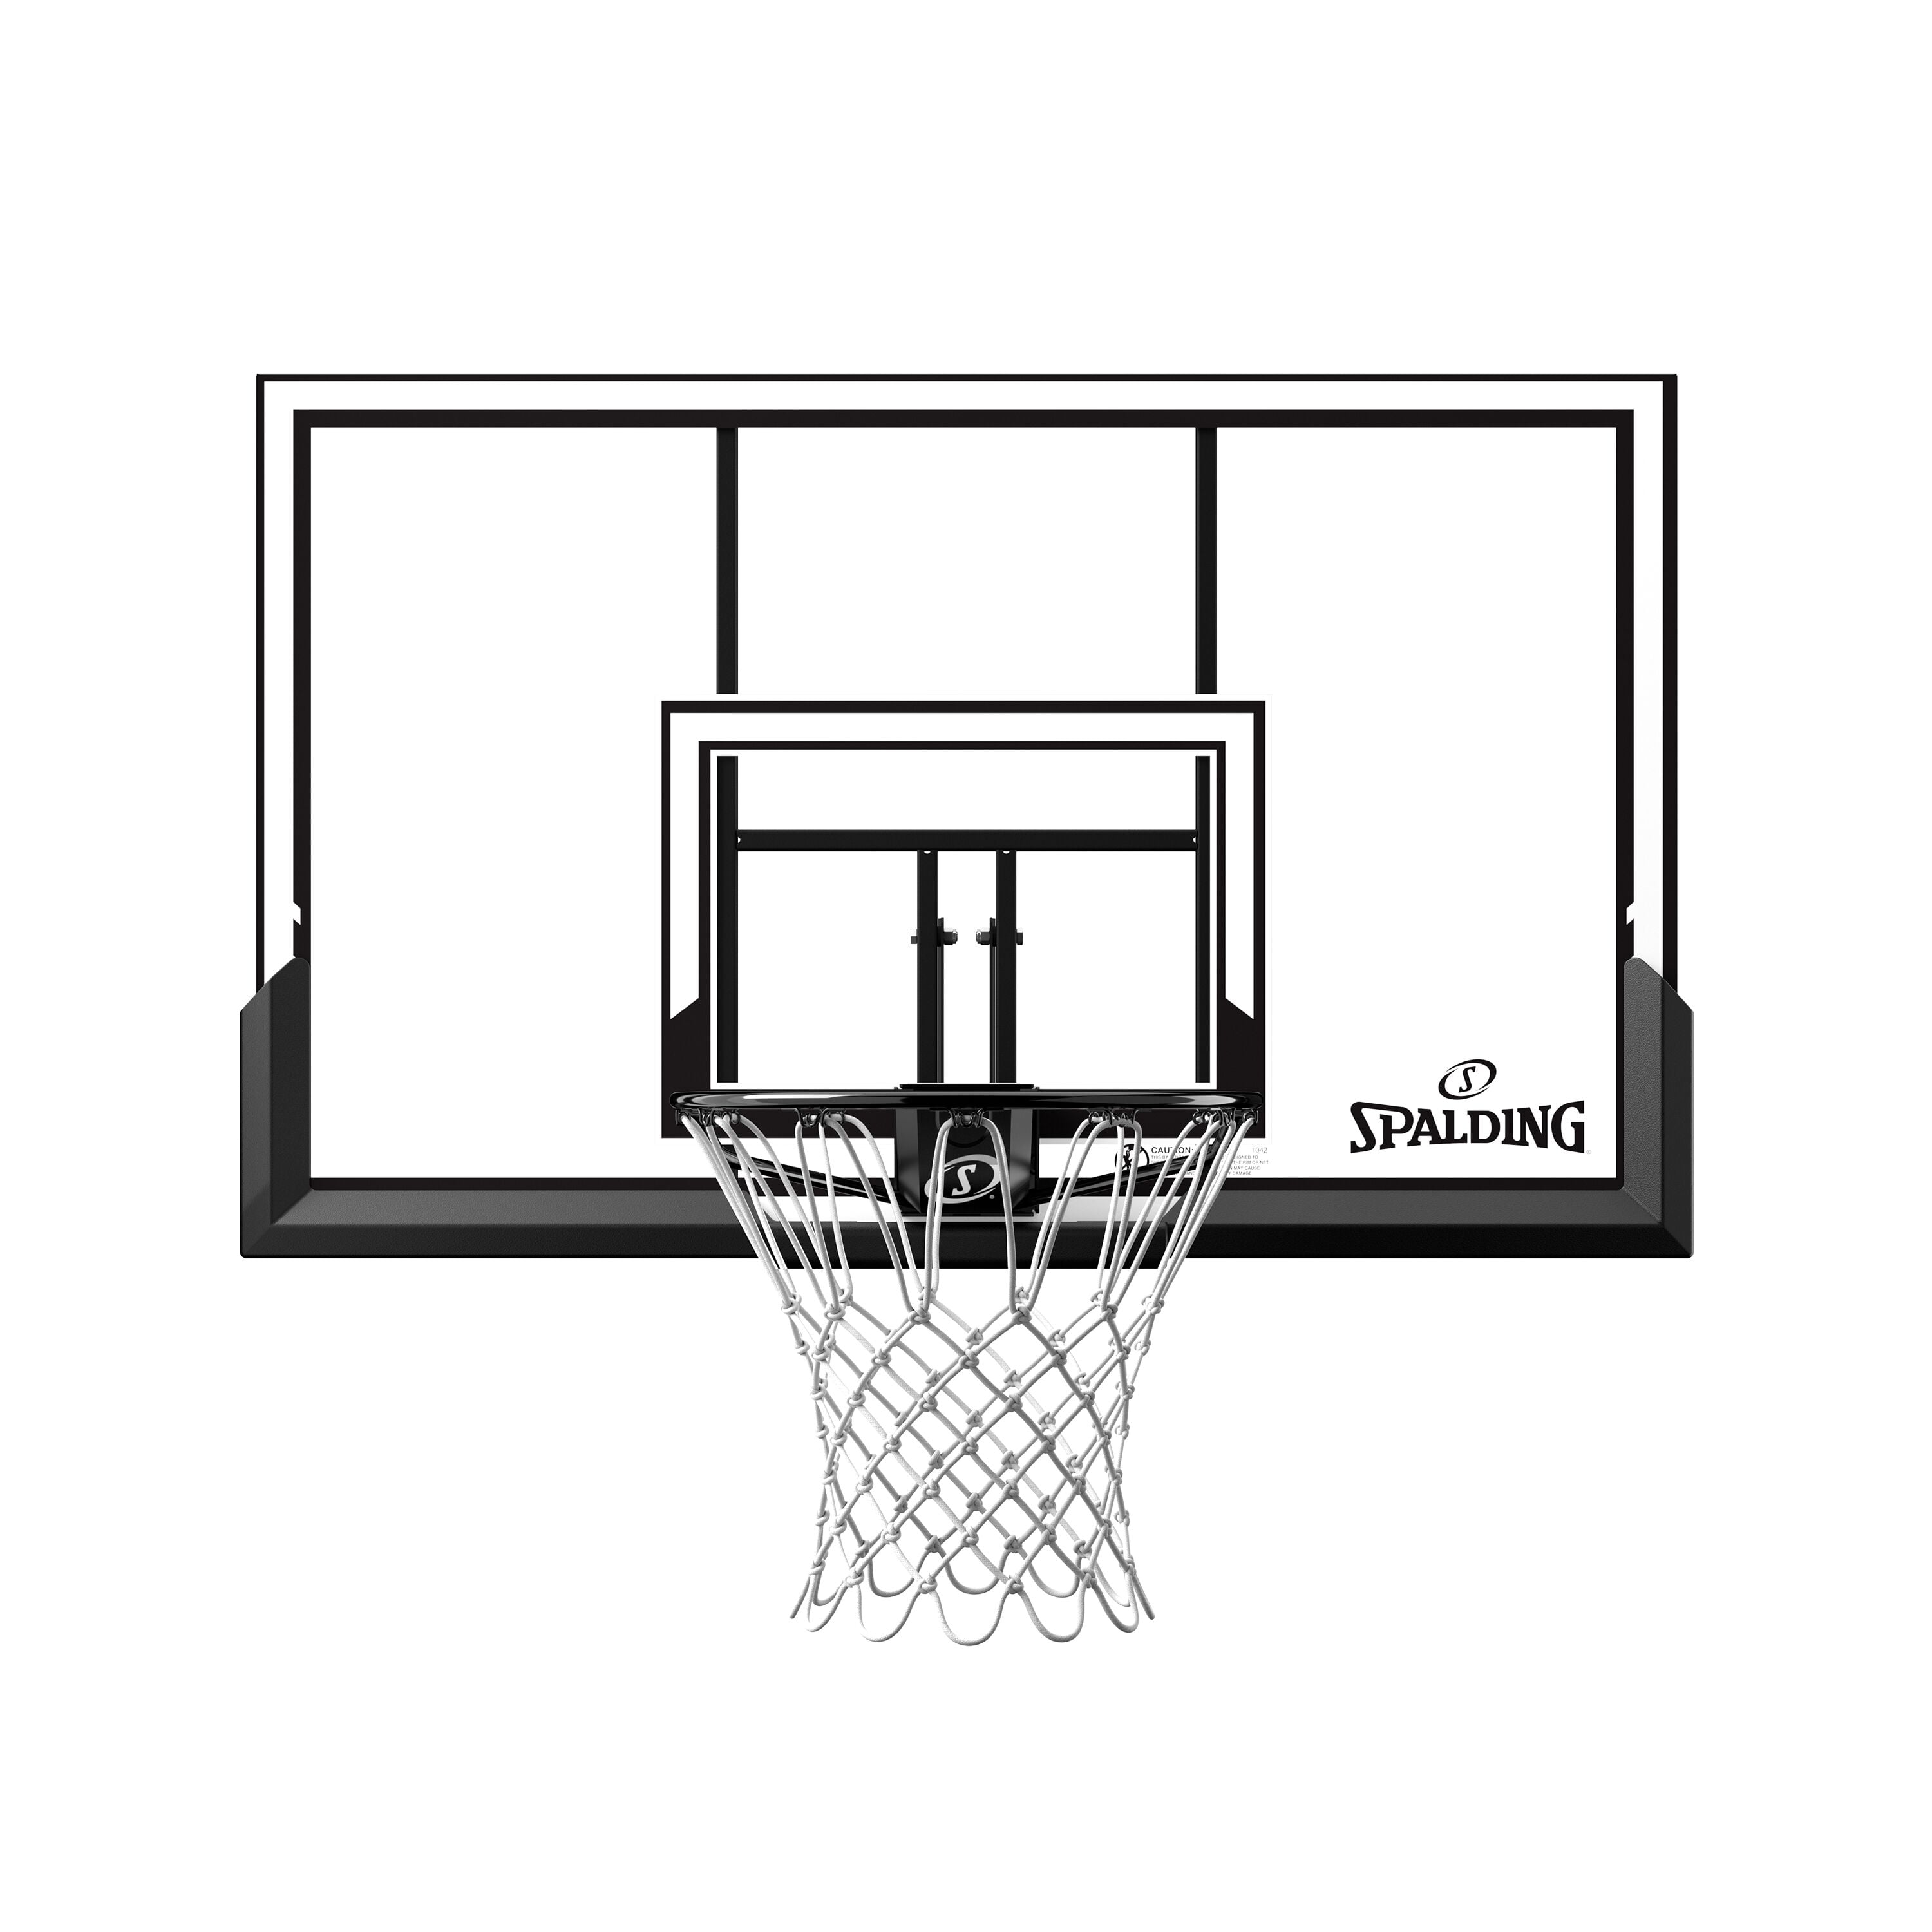 Basketball Backboards Dimensions & Drawings